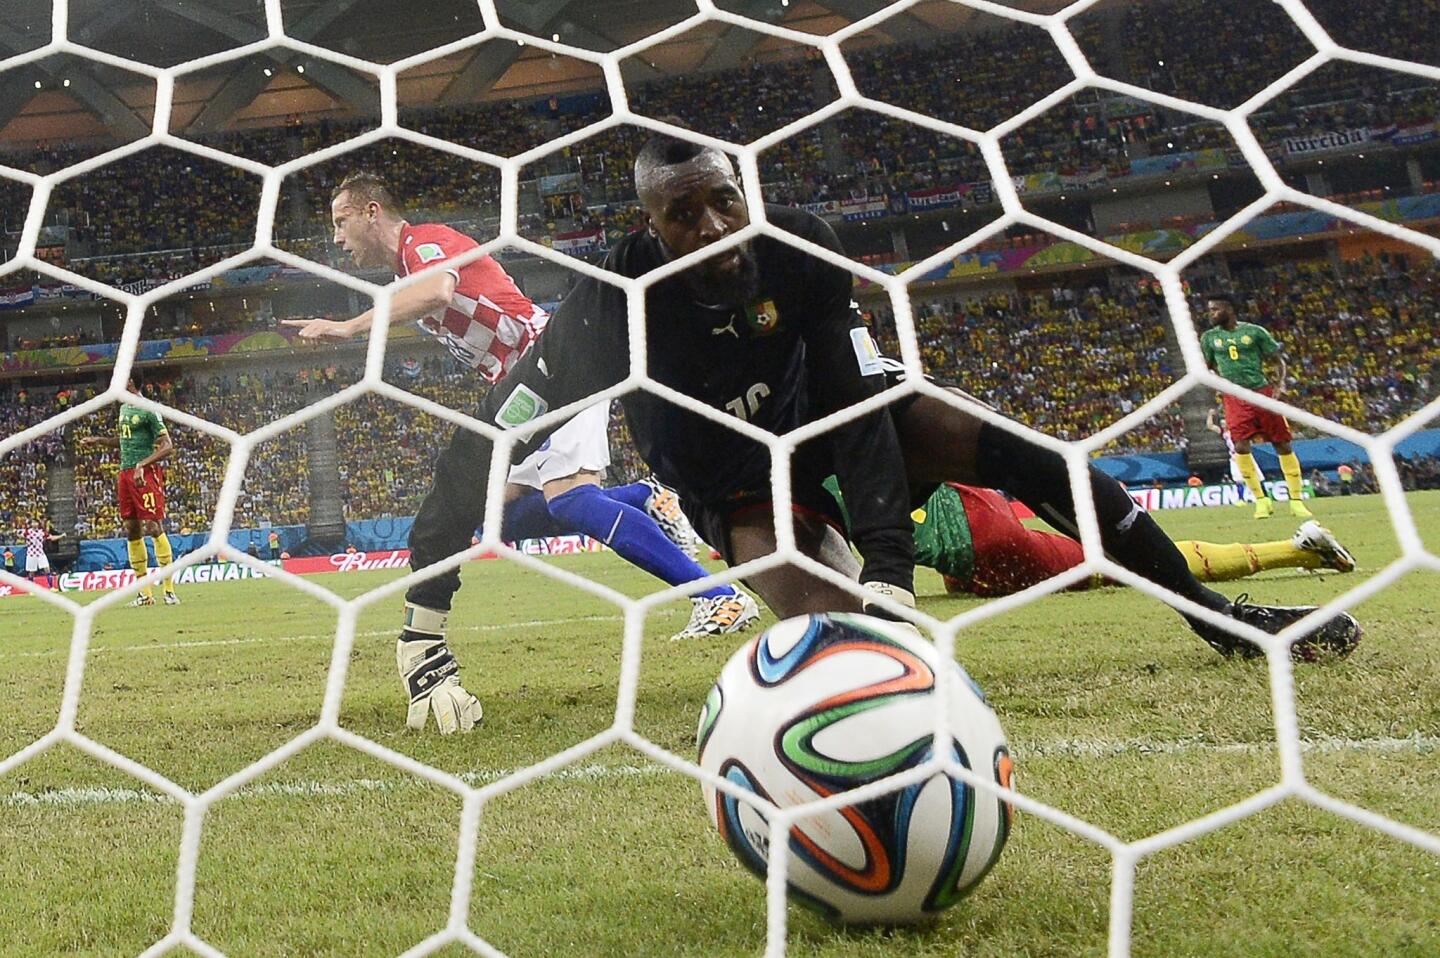 Cameroon's goalkeeper Charles Itandje looks at the ball after Croatia's forward Ivica Olic scores.